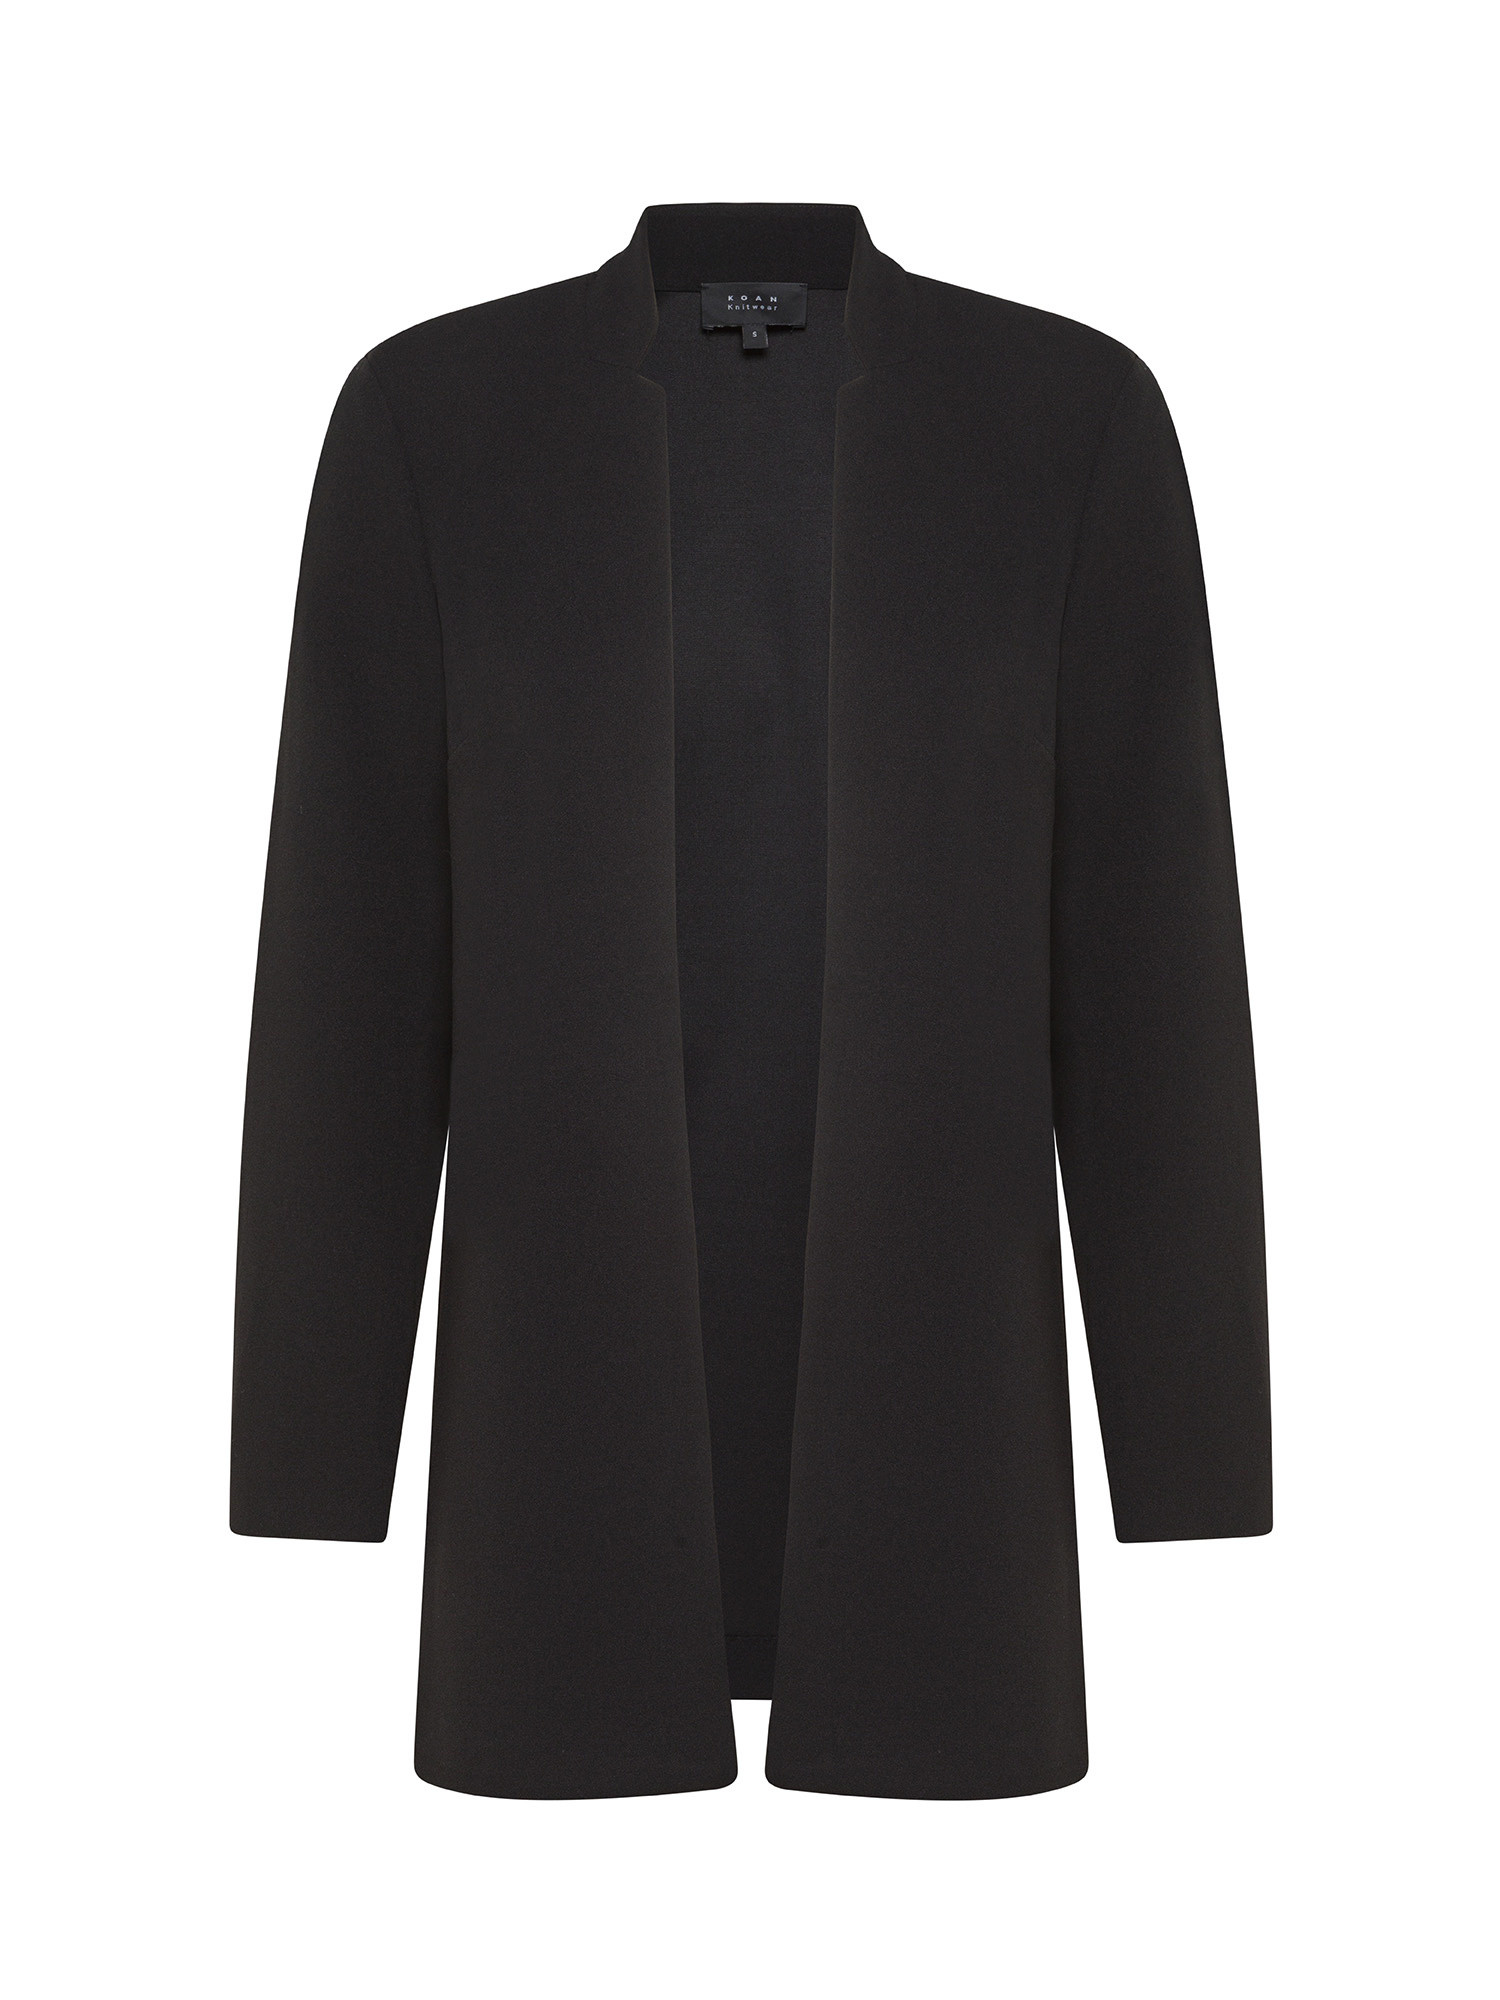 Koan - Long crepe jacket, Black, large image number 0